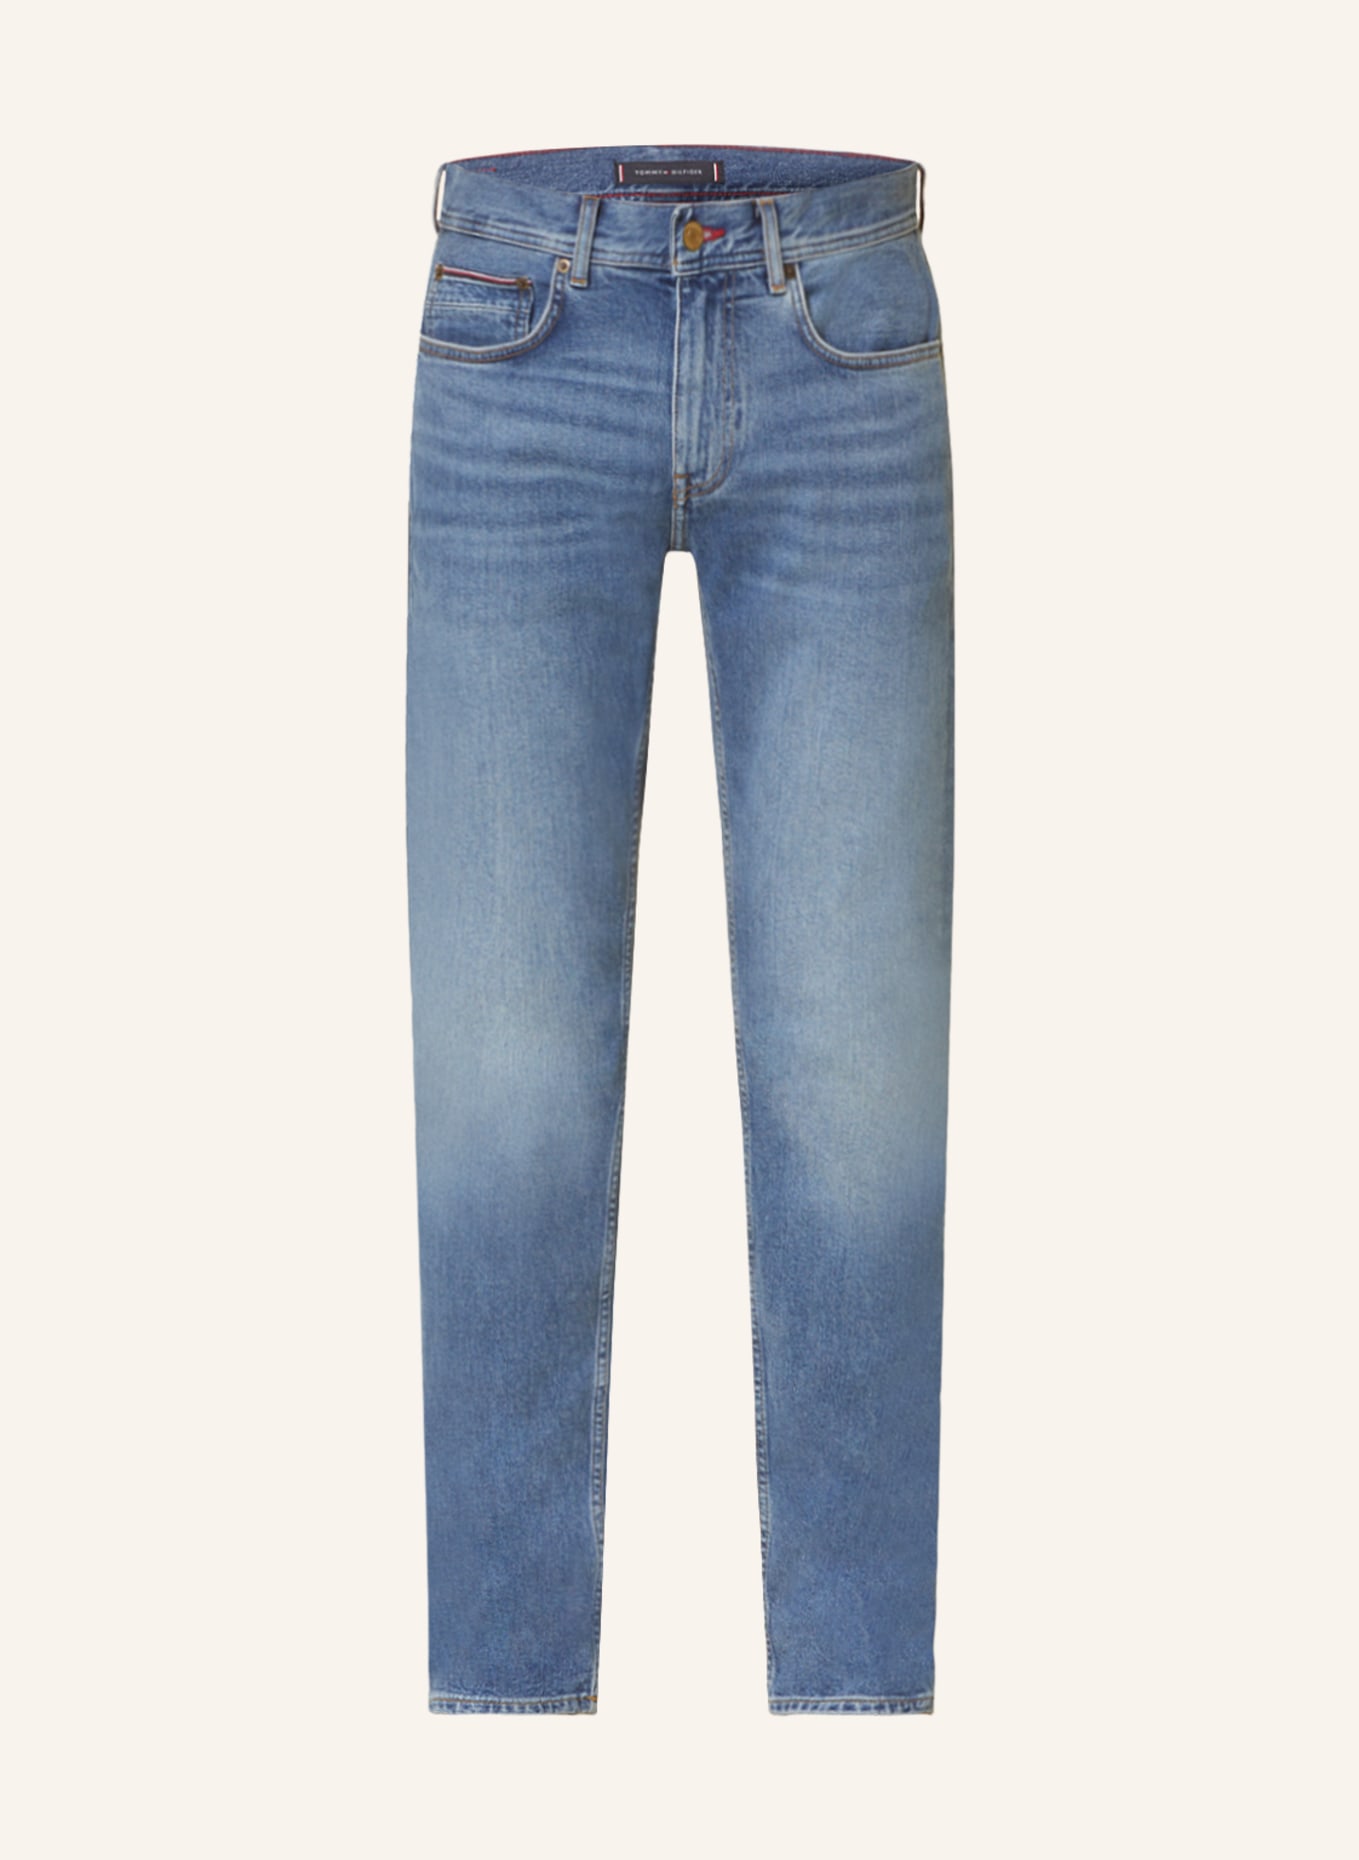 TOMMY HILFIGER Jeans CORE DENTON Straight Fit, Farbe: 1BB Boston Indigo (Bild 1)